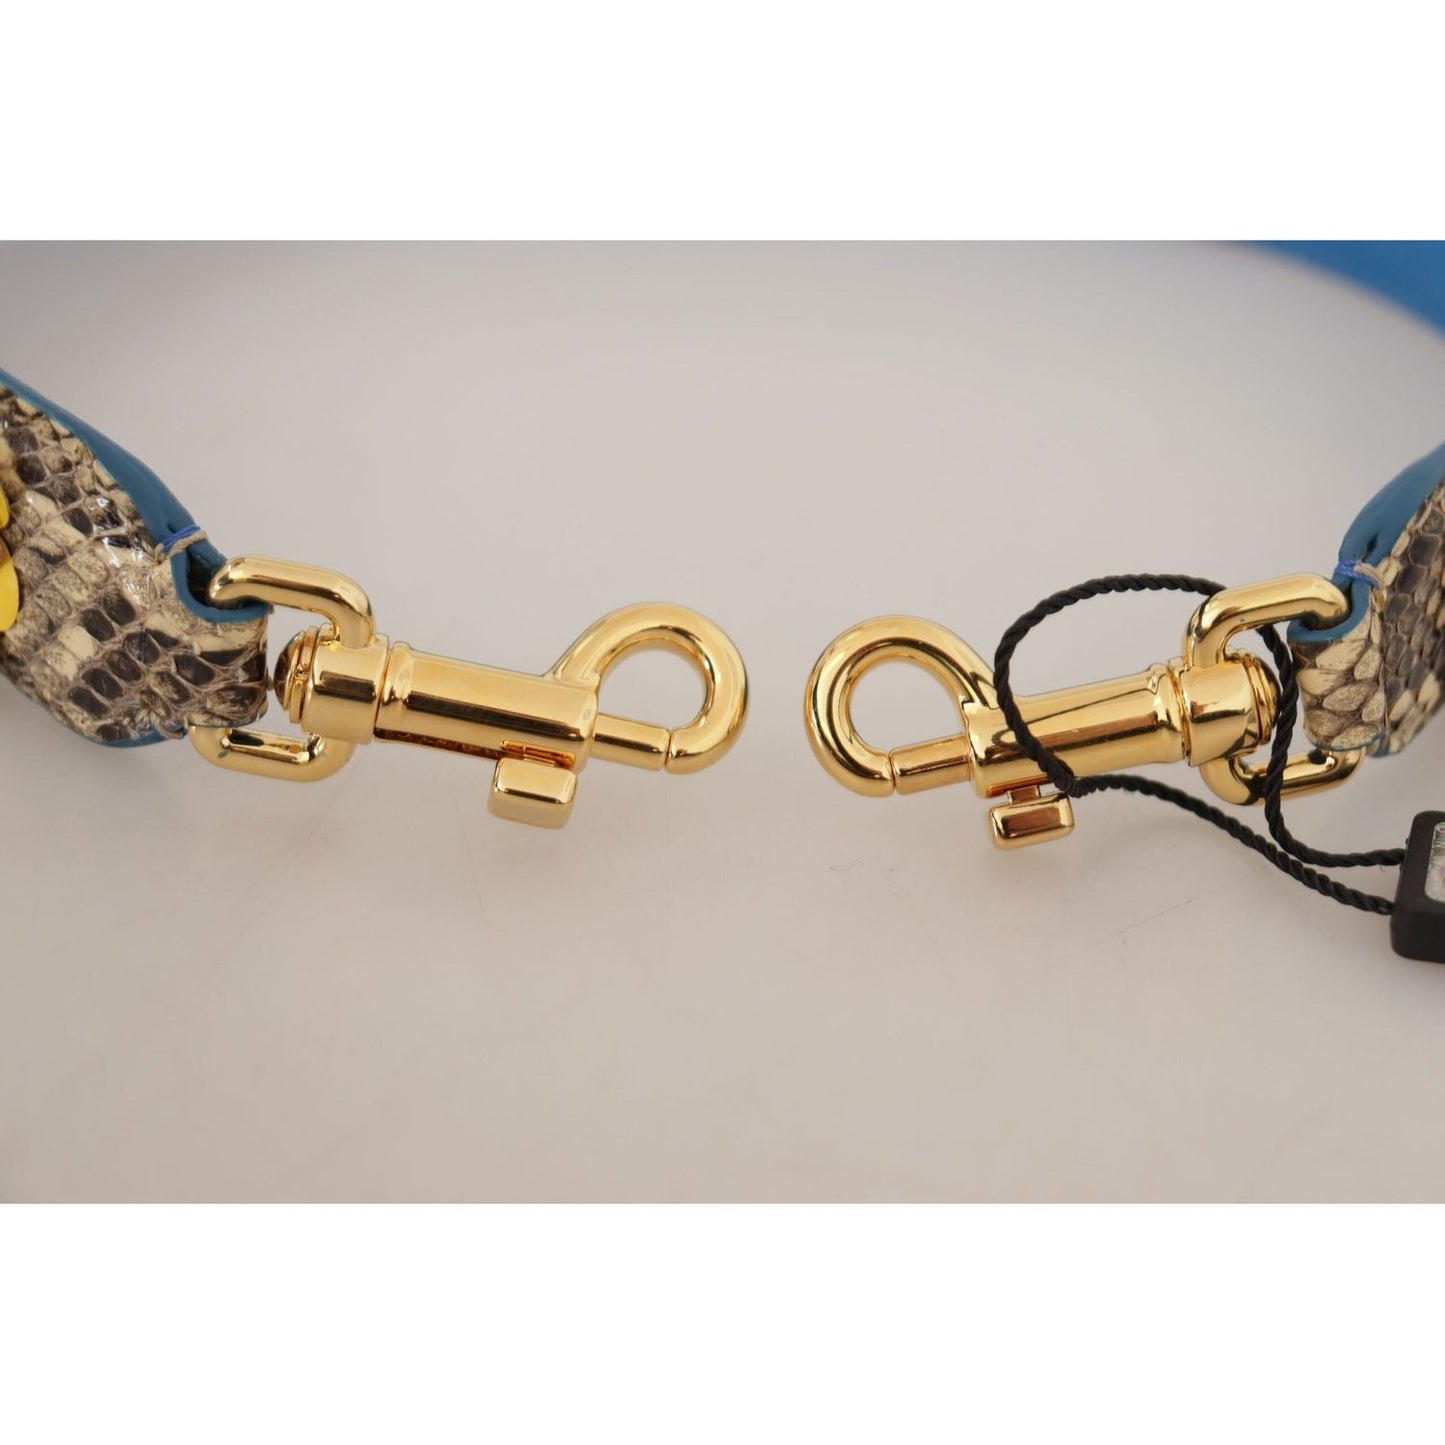 Dolce & Gabbana Elegant Beige Python Leather Shoulder Strap beige-python-leather-floral-studded-shoulder-strap-1 IMG_9615-1-scaled-f25f23f1-689.jpg